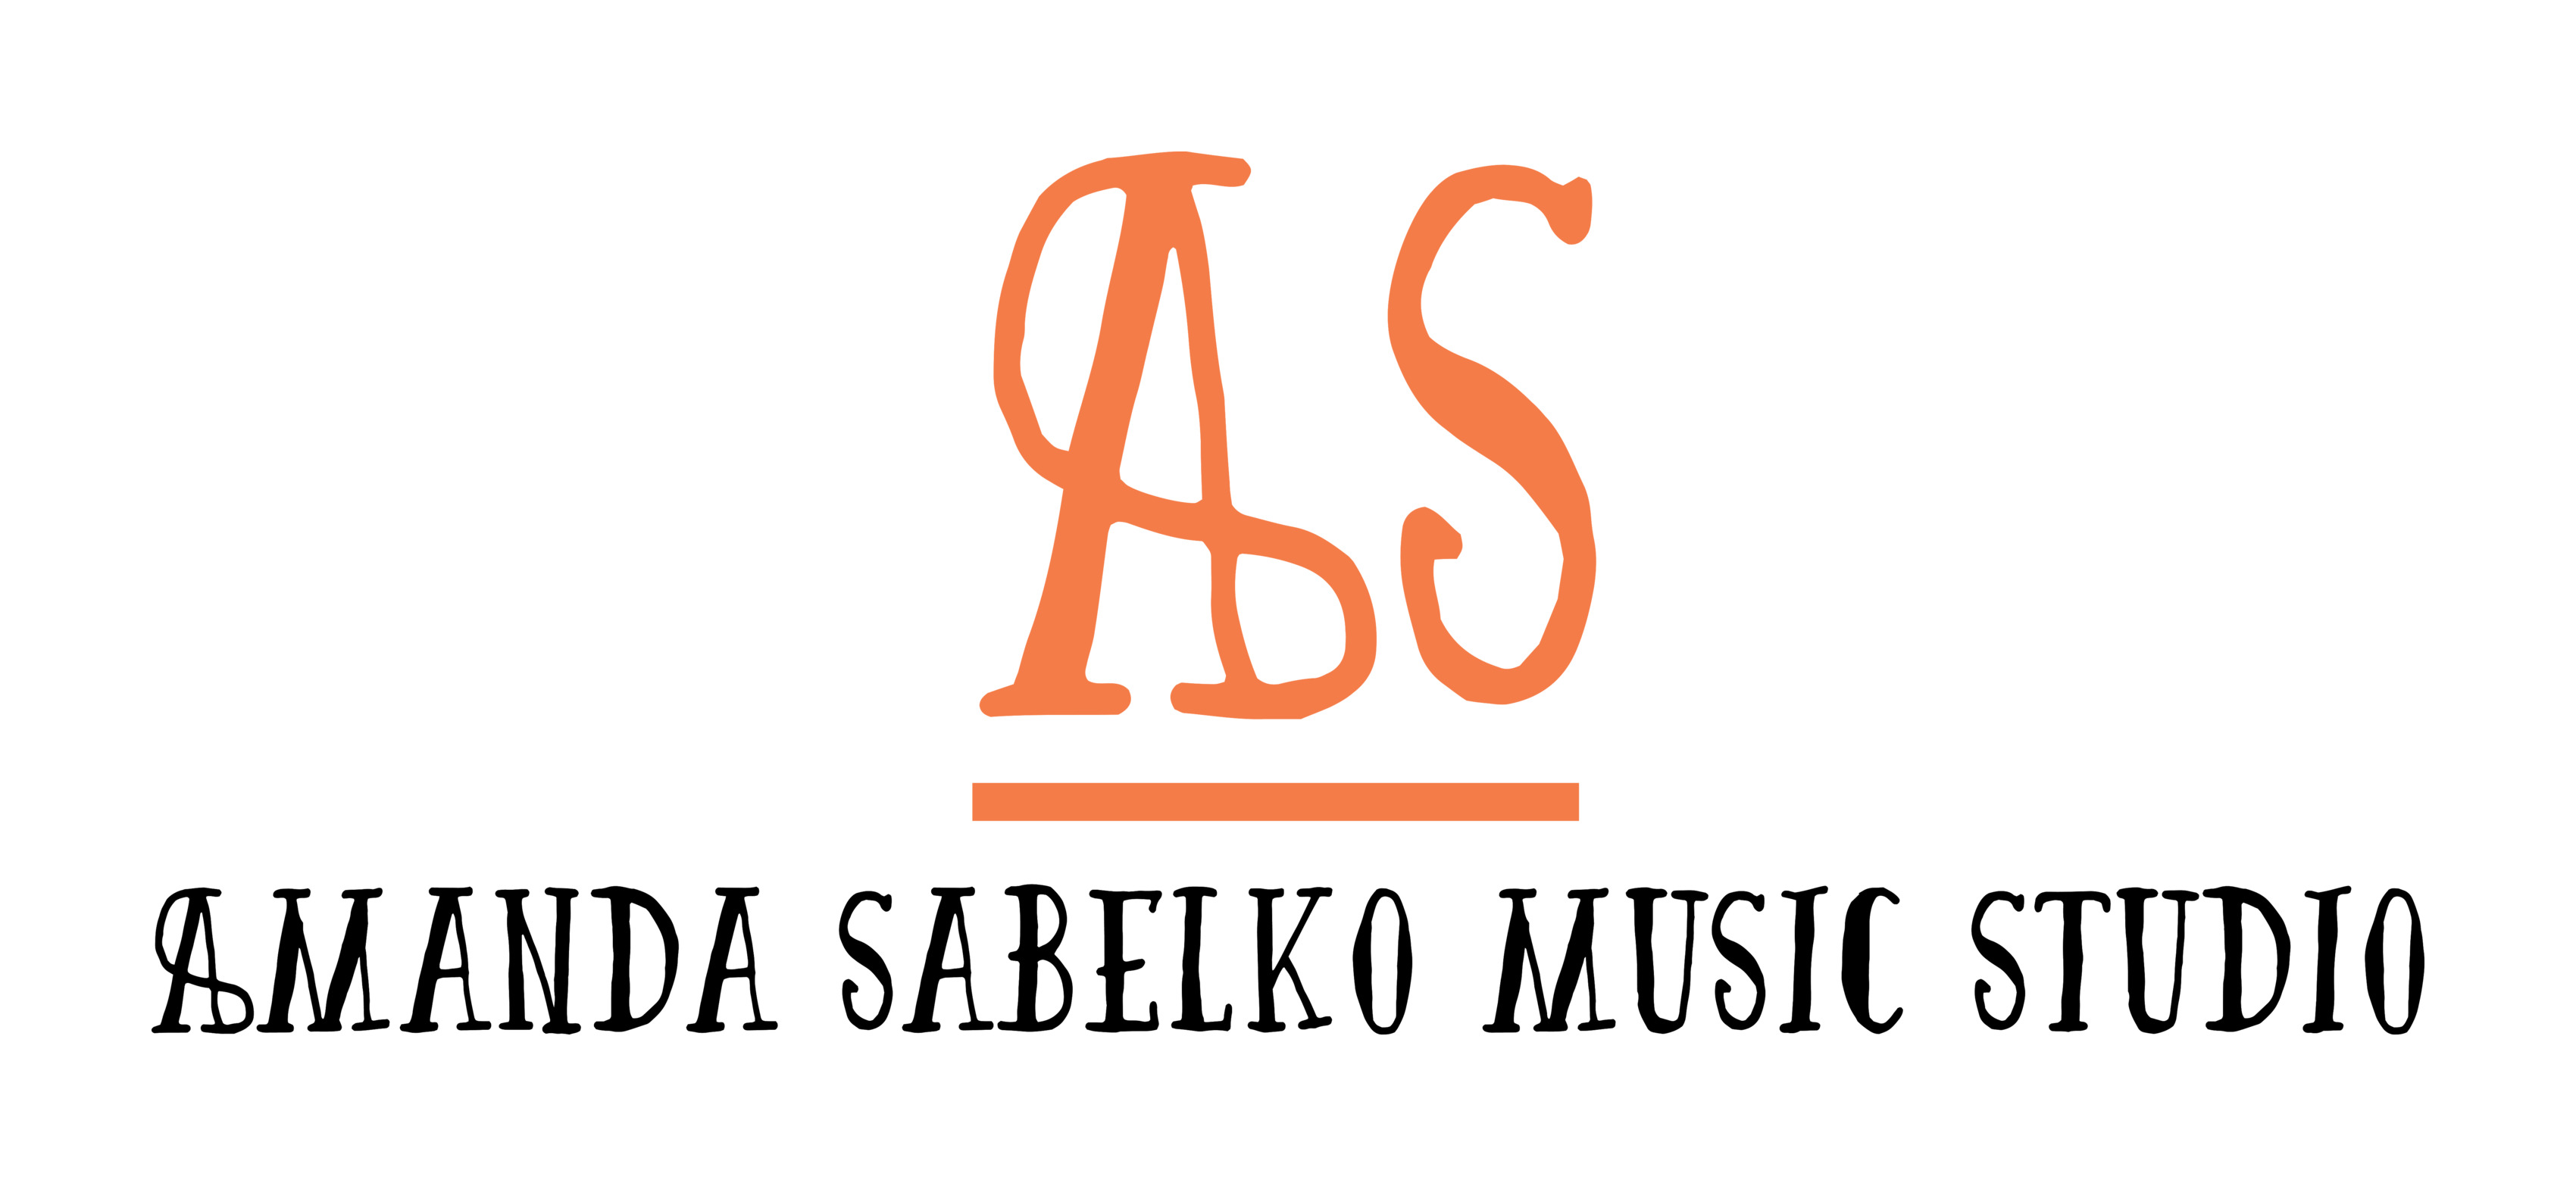 amanda sabelko music studio